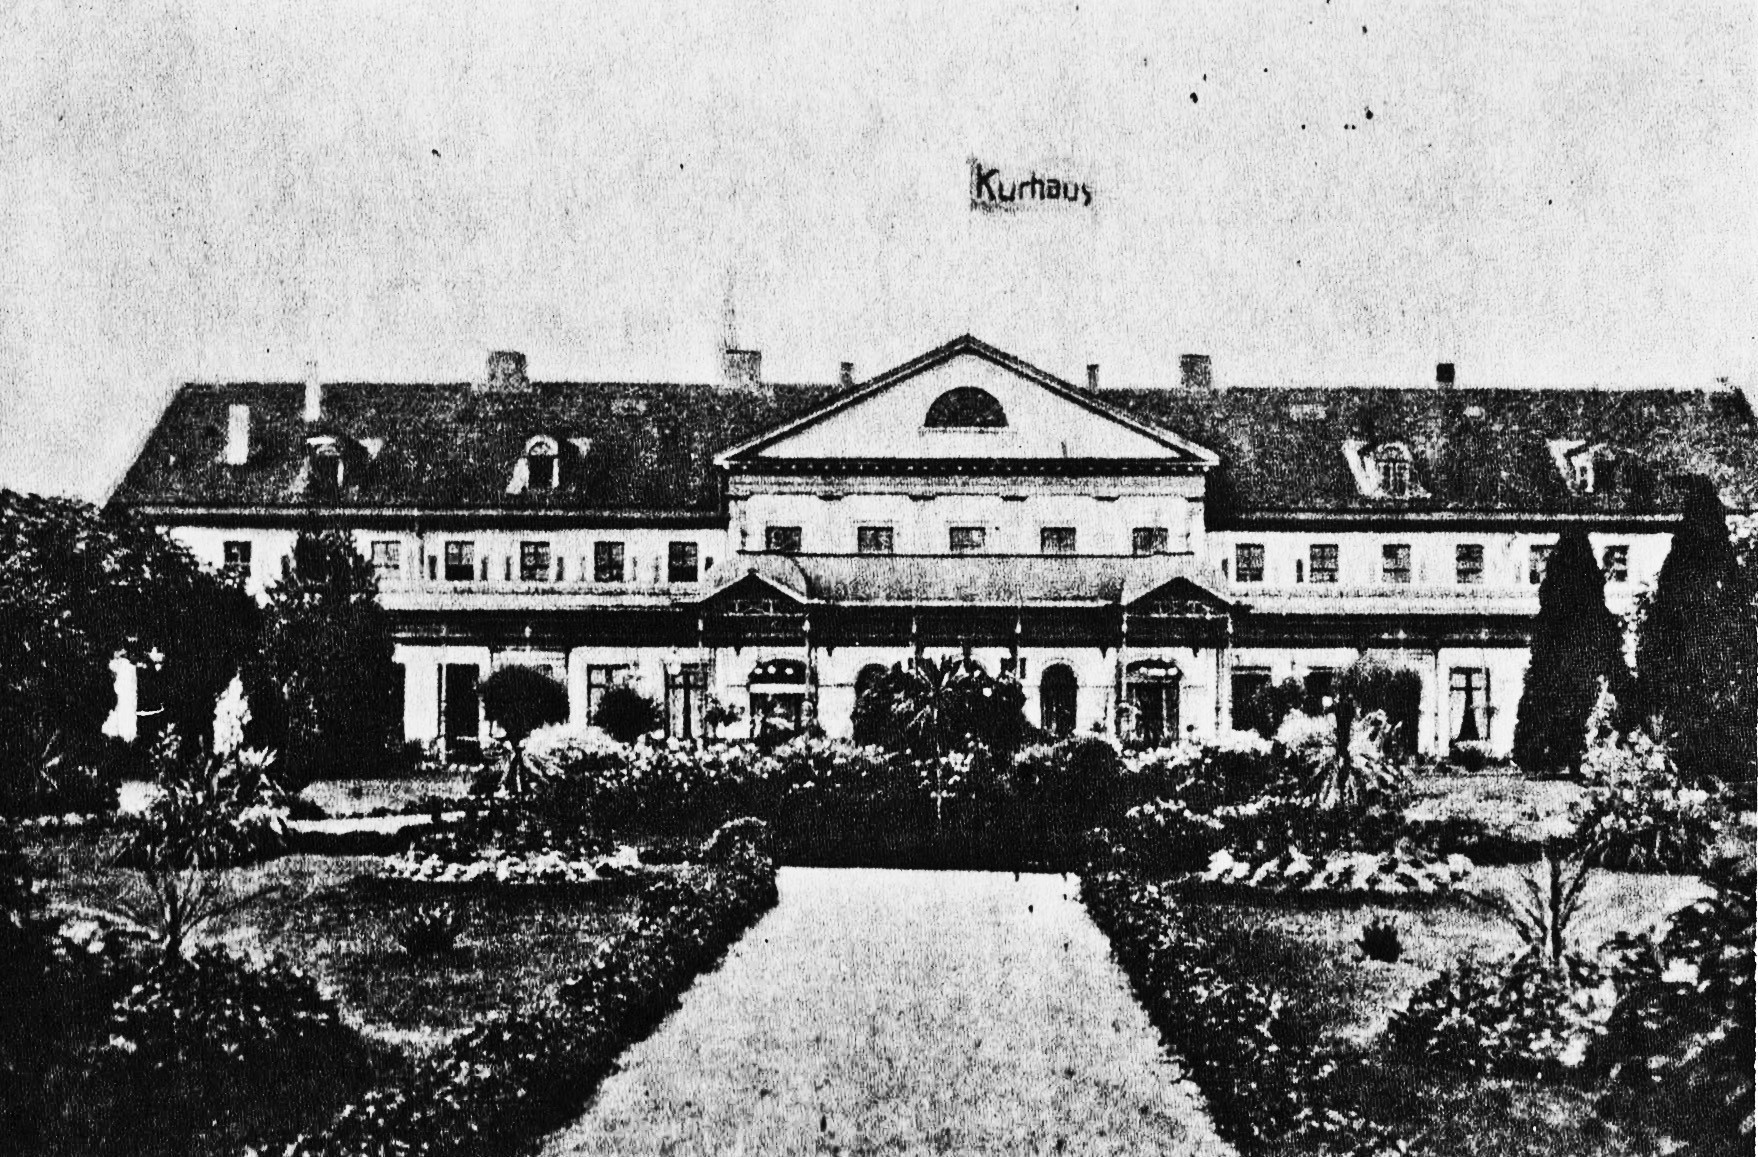 Foto-Sammlung Adolf Krapp, Ordner 14: Kur-Haus, 1905 (Museumsgesellschaft Bad Dürkheim e.V. CC BY-NC-SA)